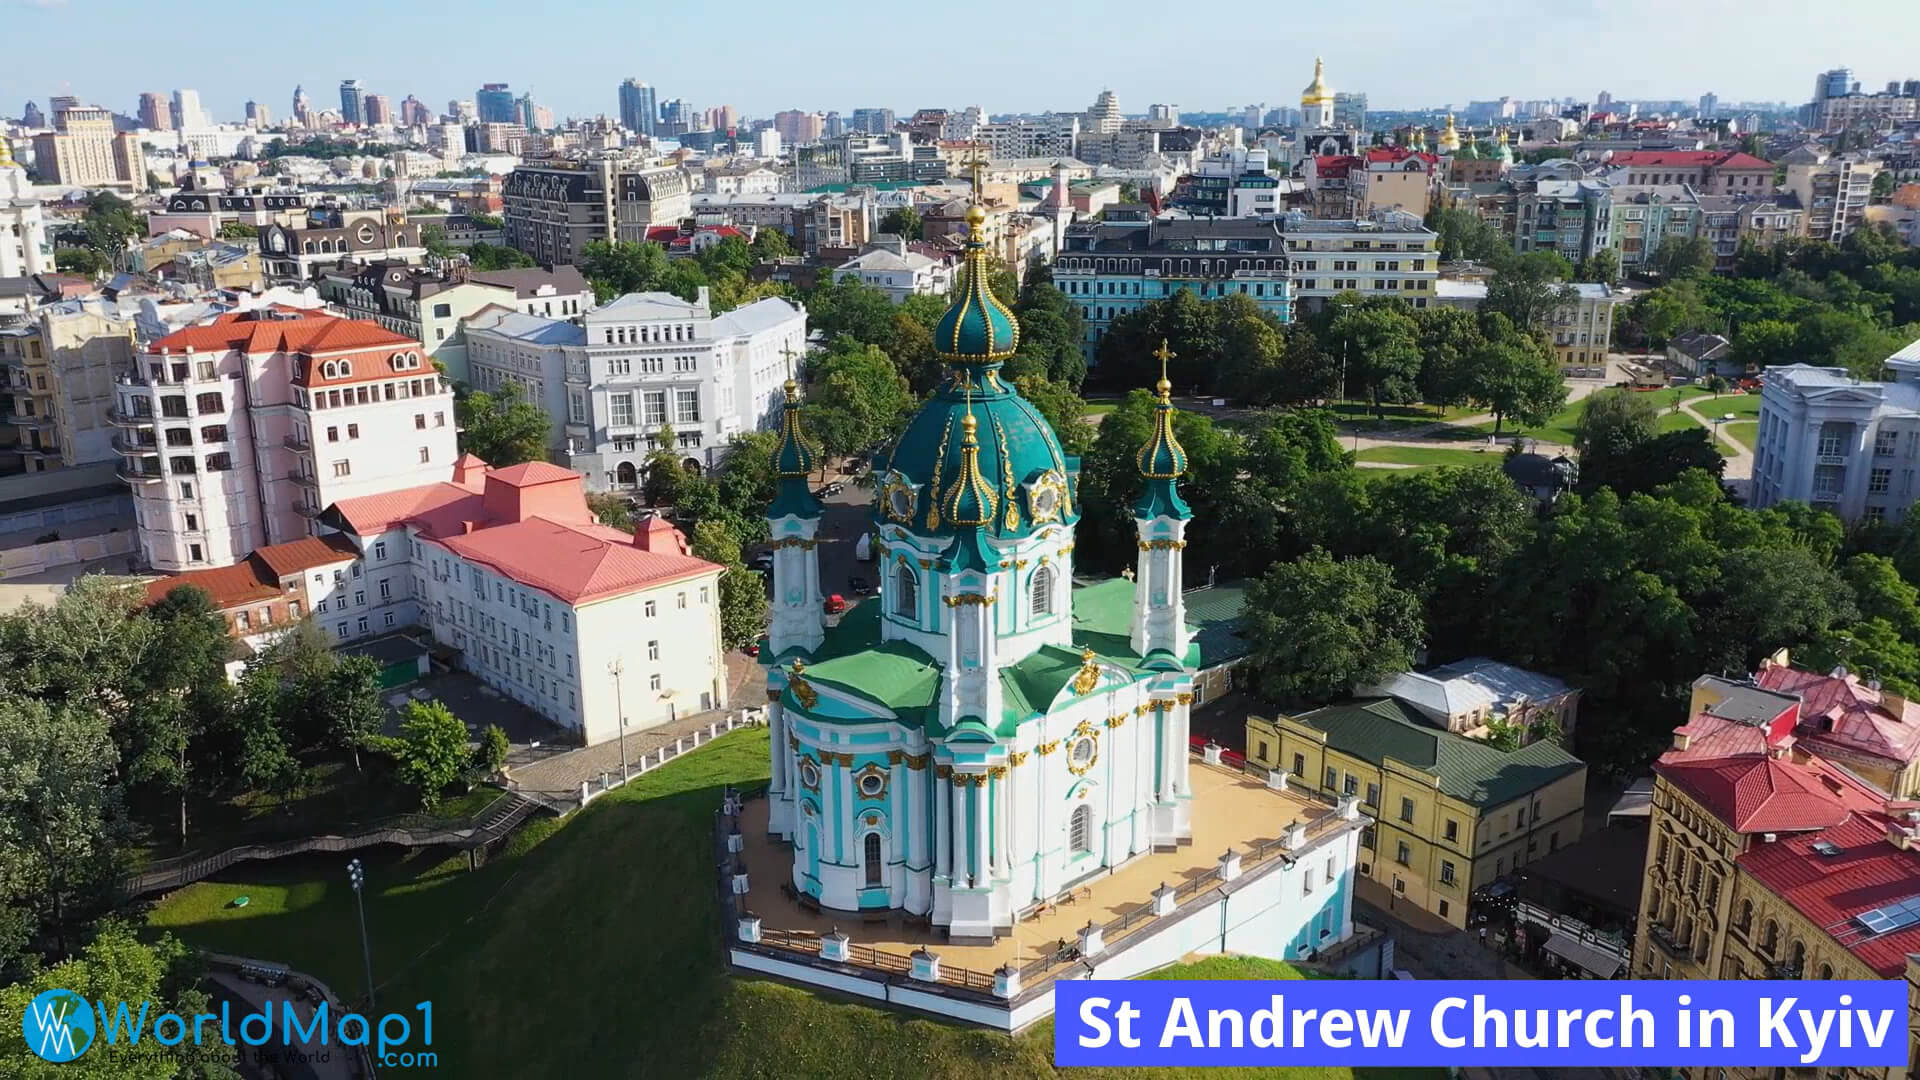 St Andrew Church in Kyiv